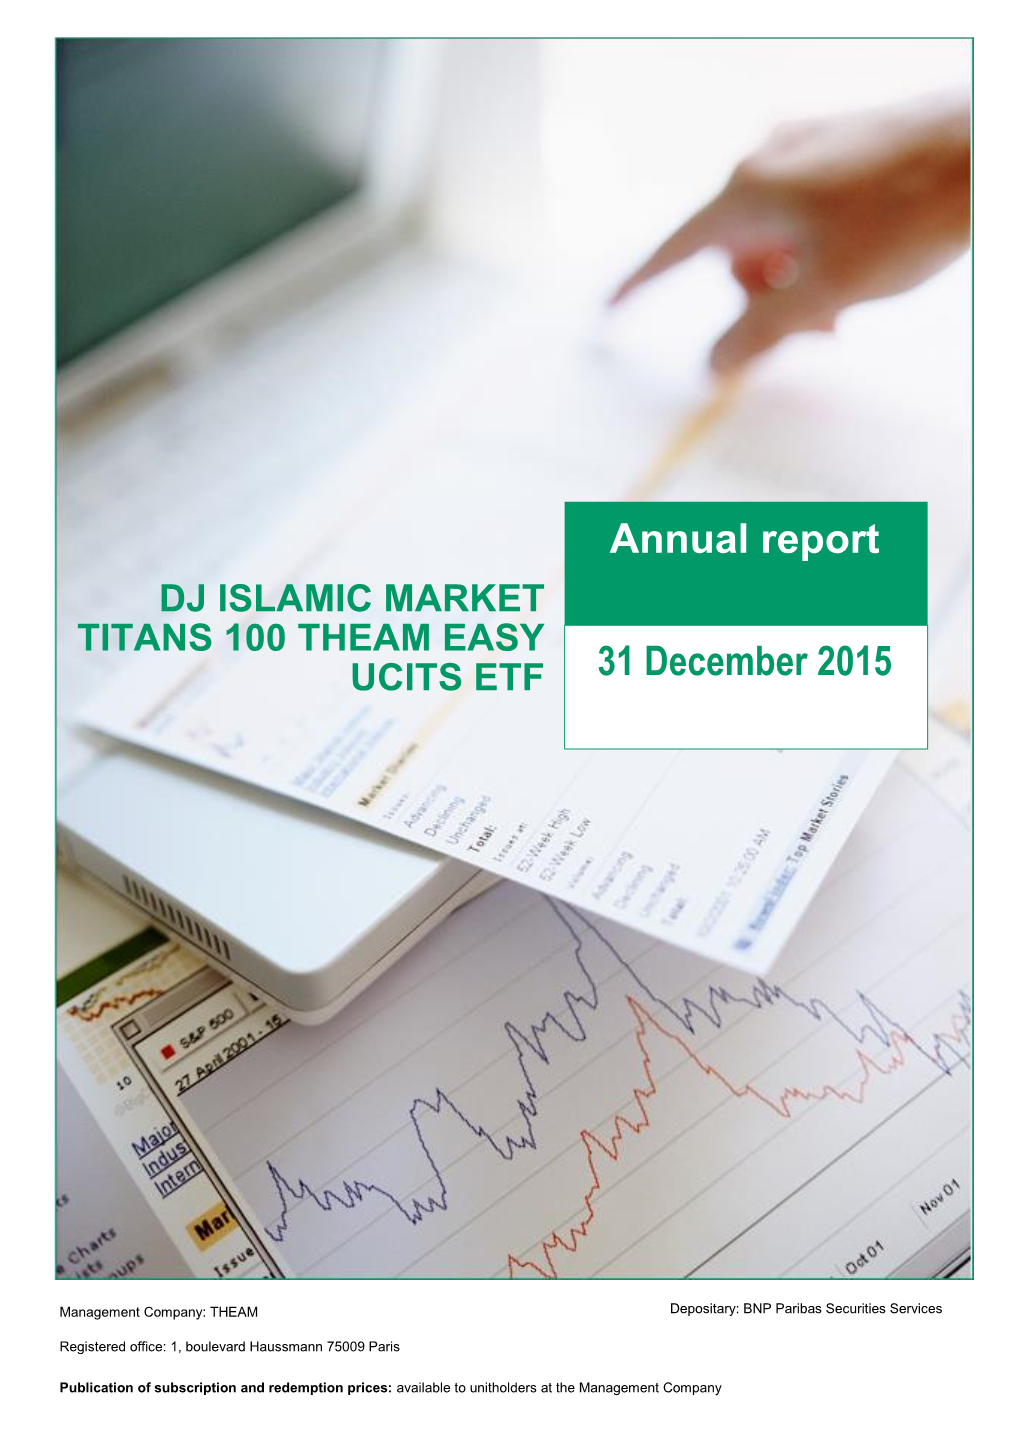 Annual Report 31 December 2015